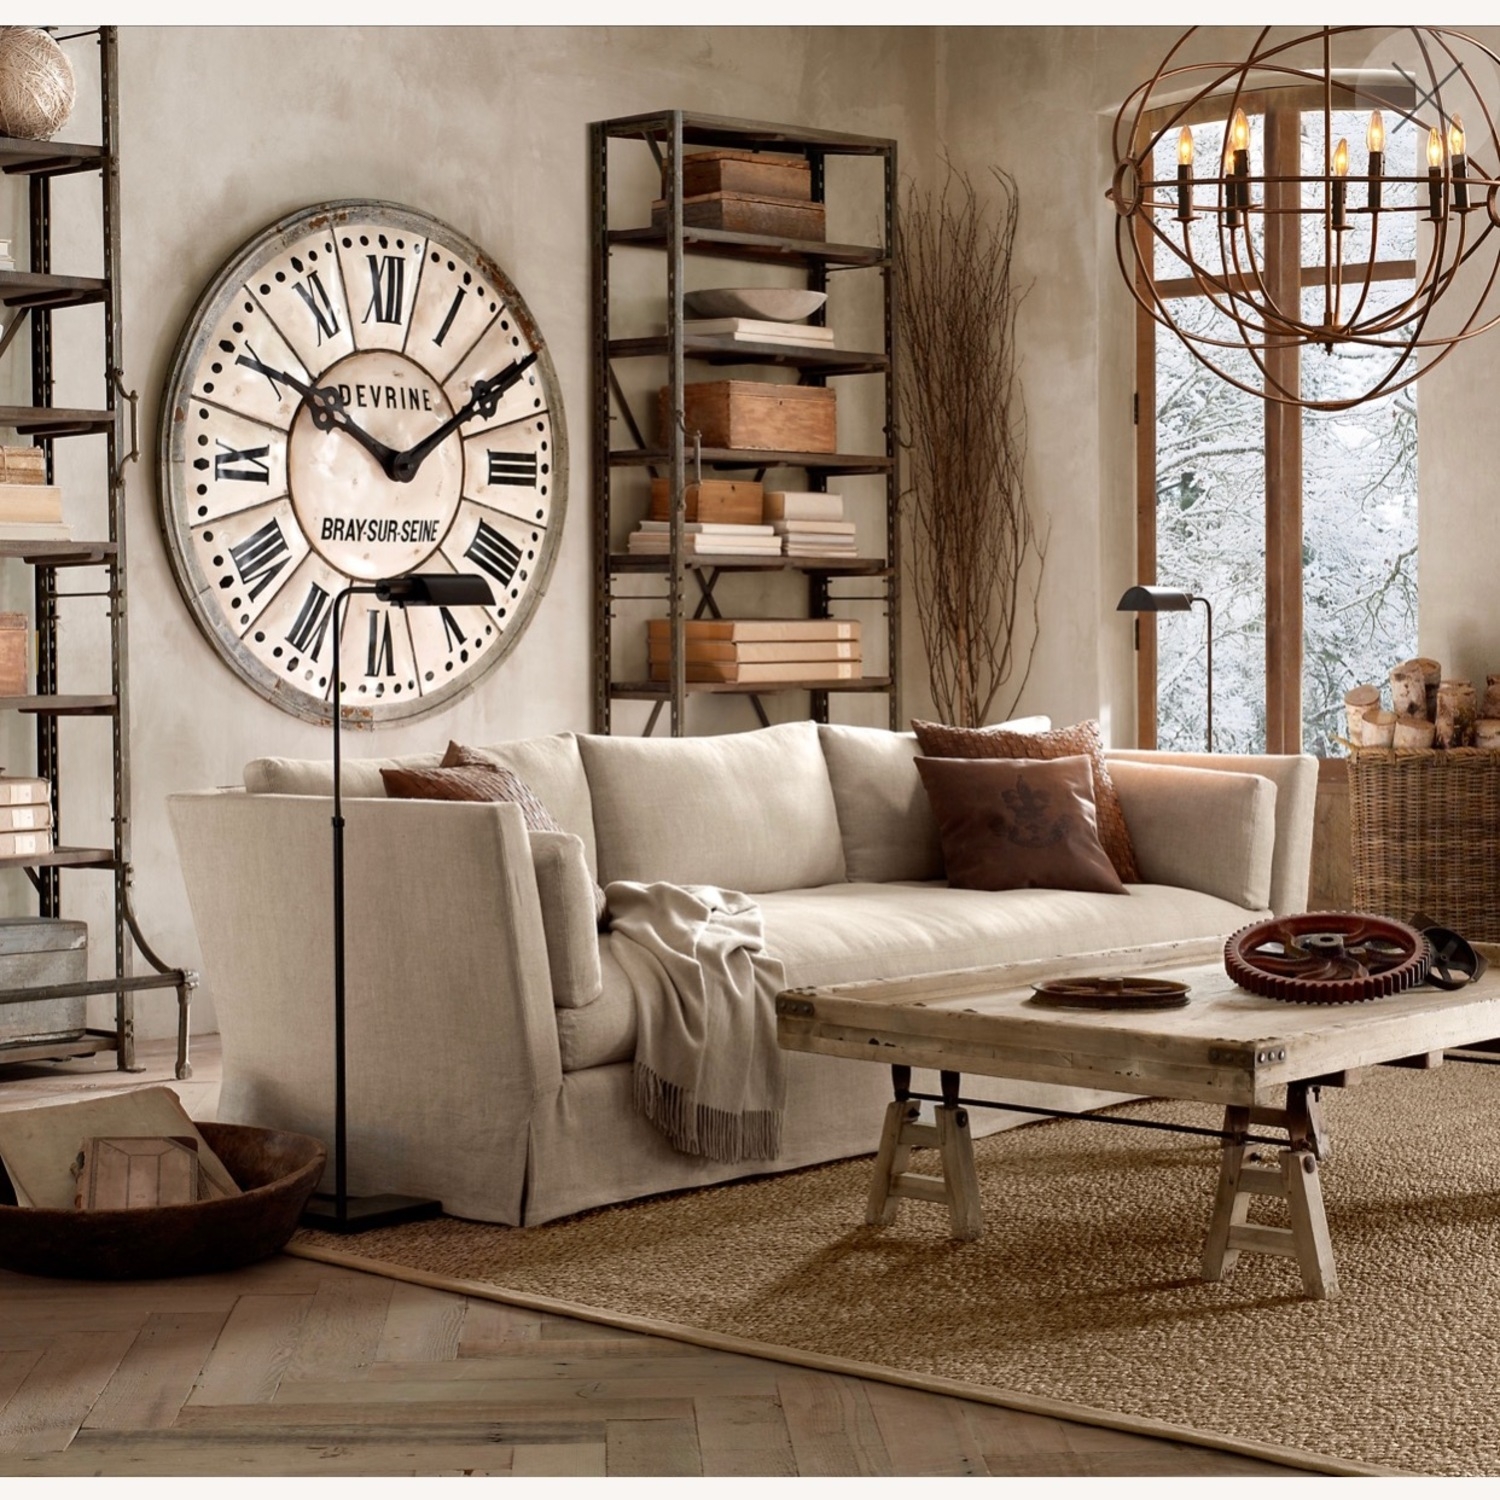 Oversized decorative wall clocks